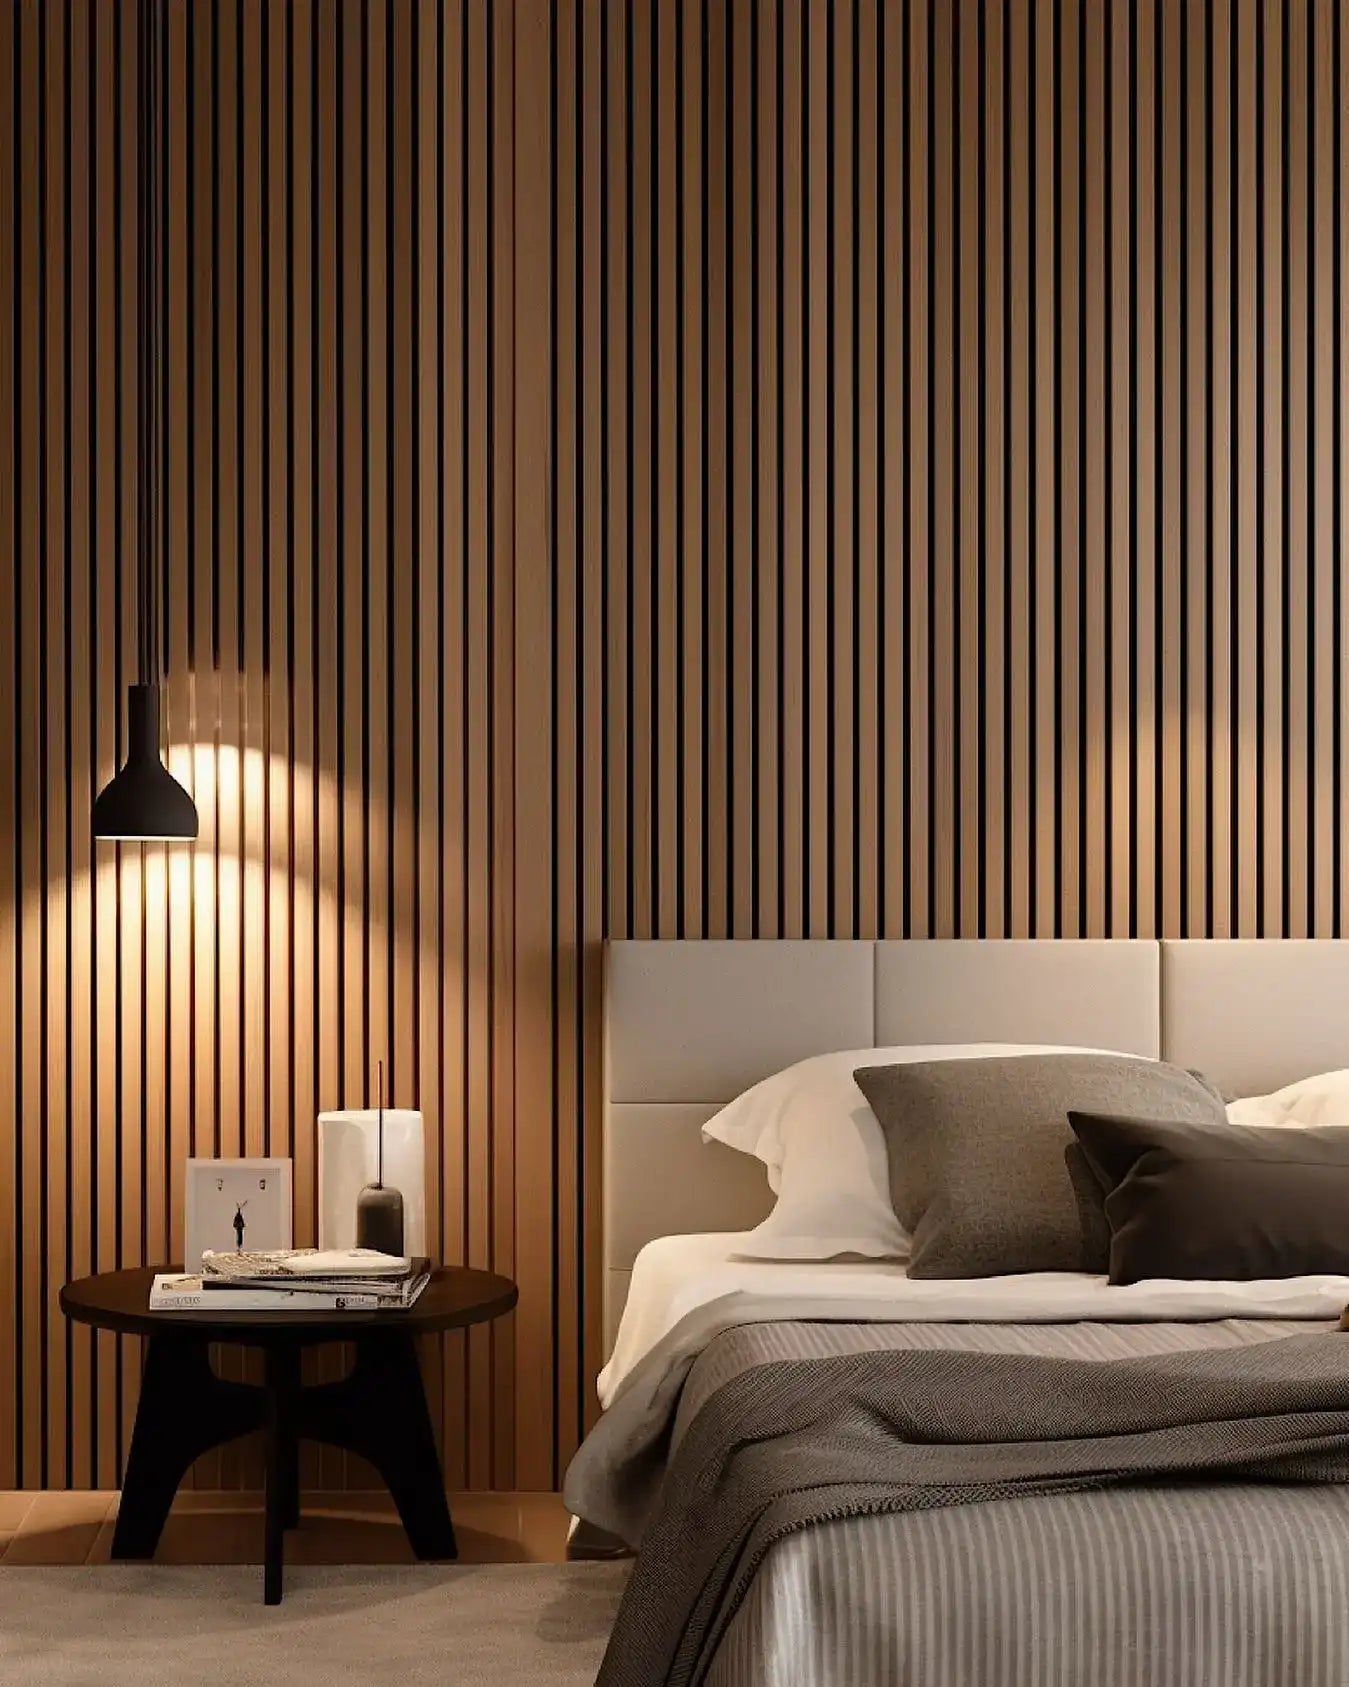 White oak wood slat panels in bedroom design